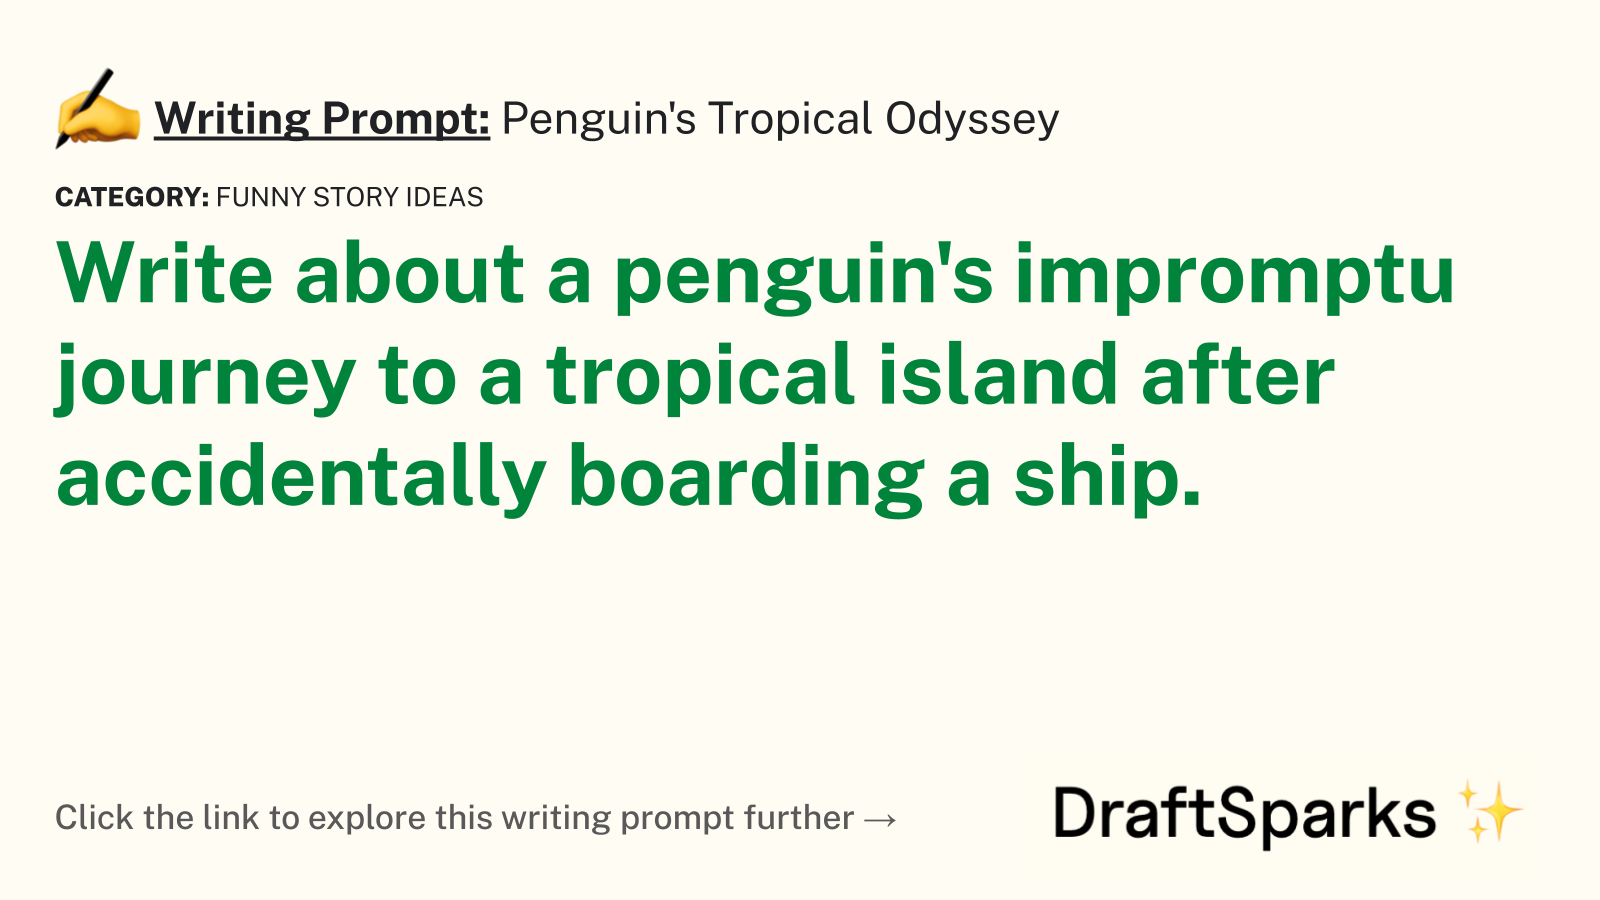 Penguin’s Tropical Odyssey